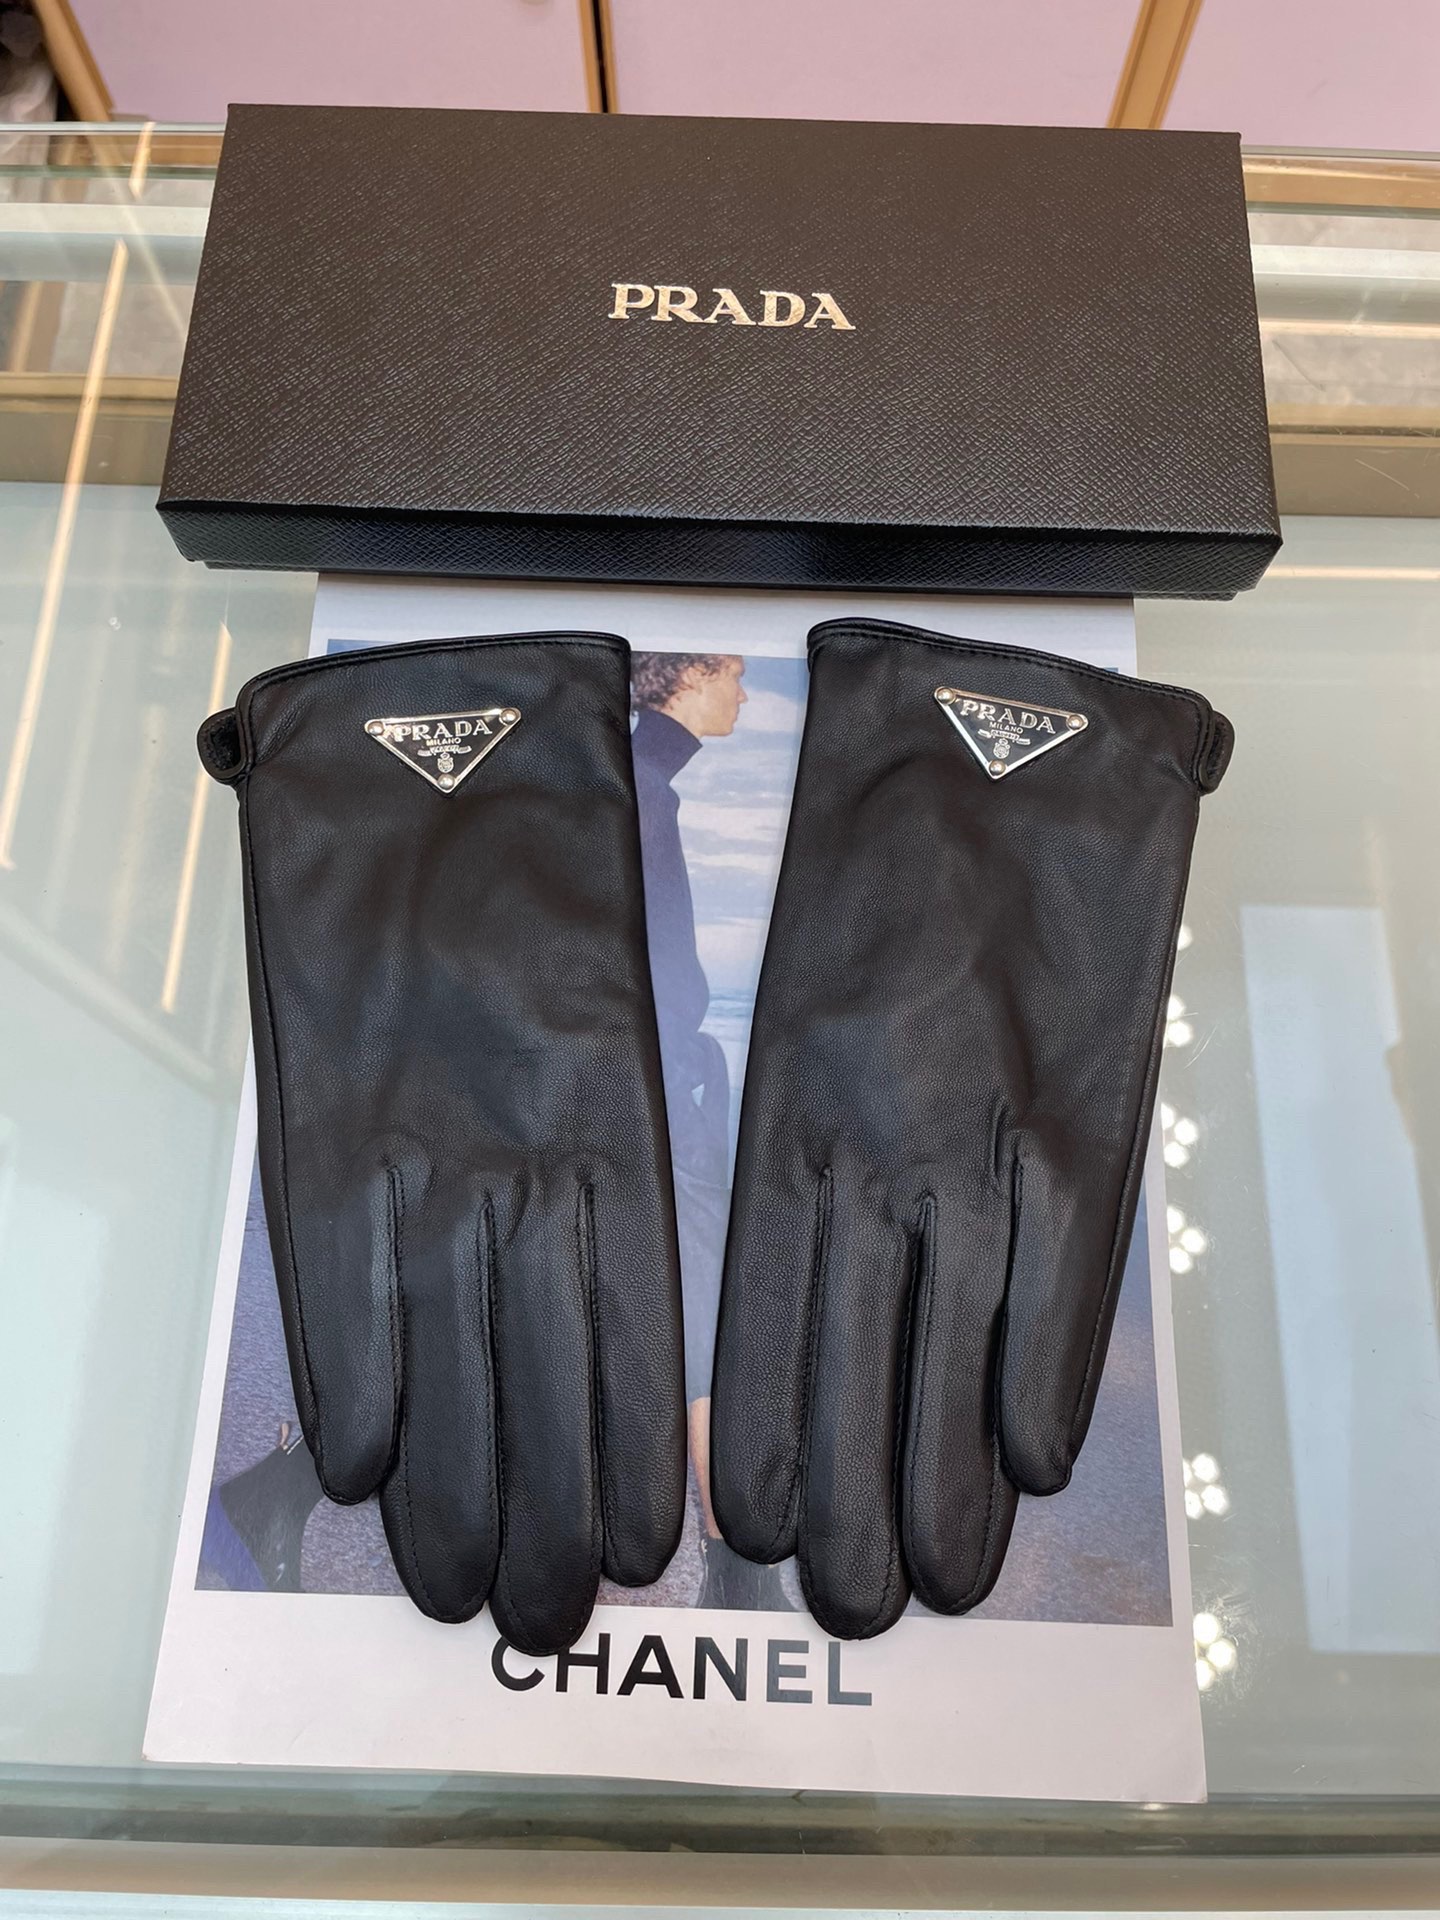 ️普拉达新款女士手套一级羊皮皮质超薄柔软舒适特显手型质感超群码数ML